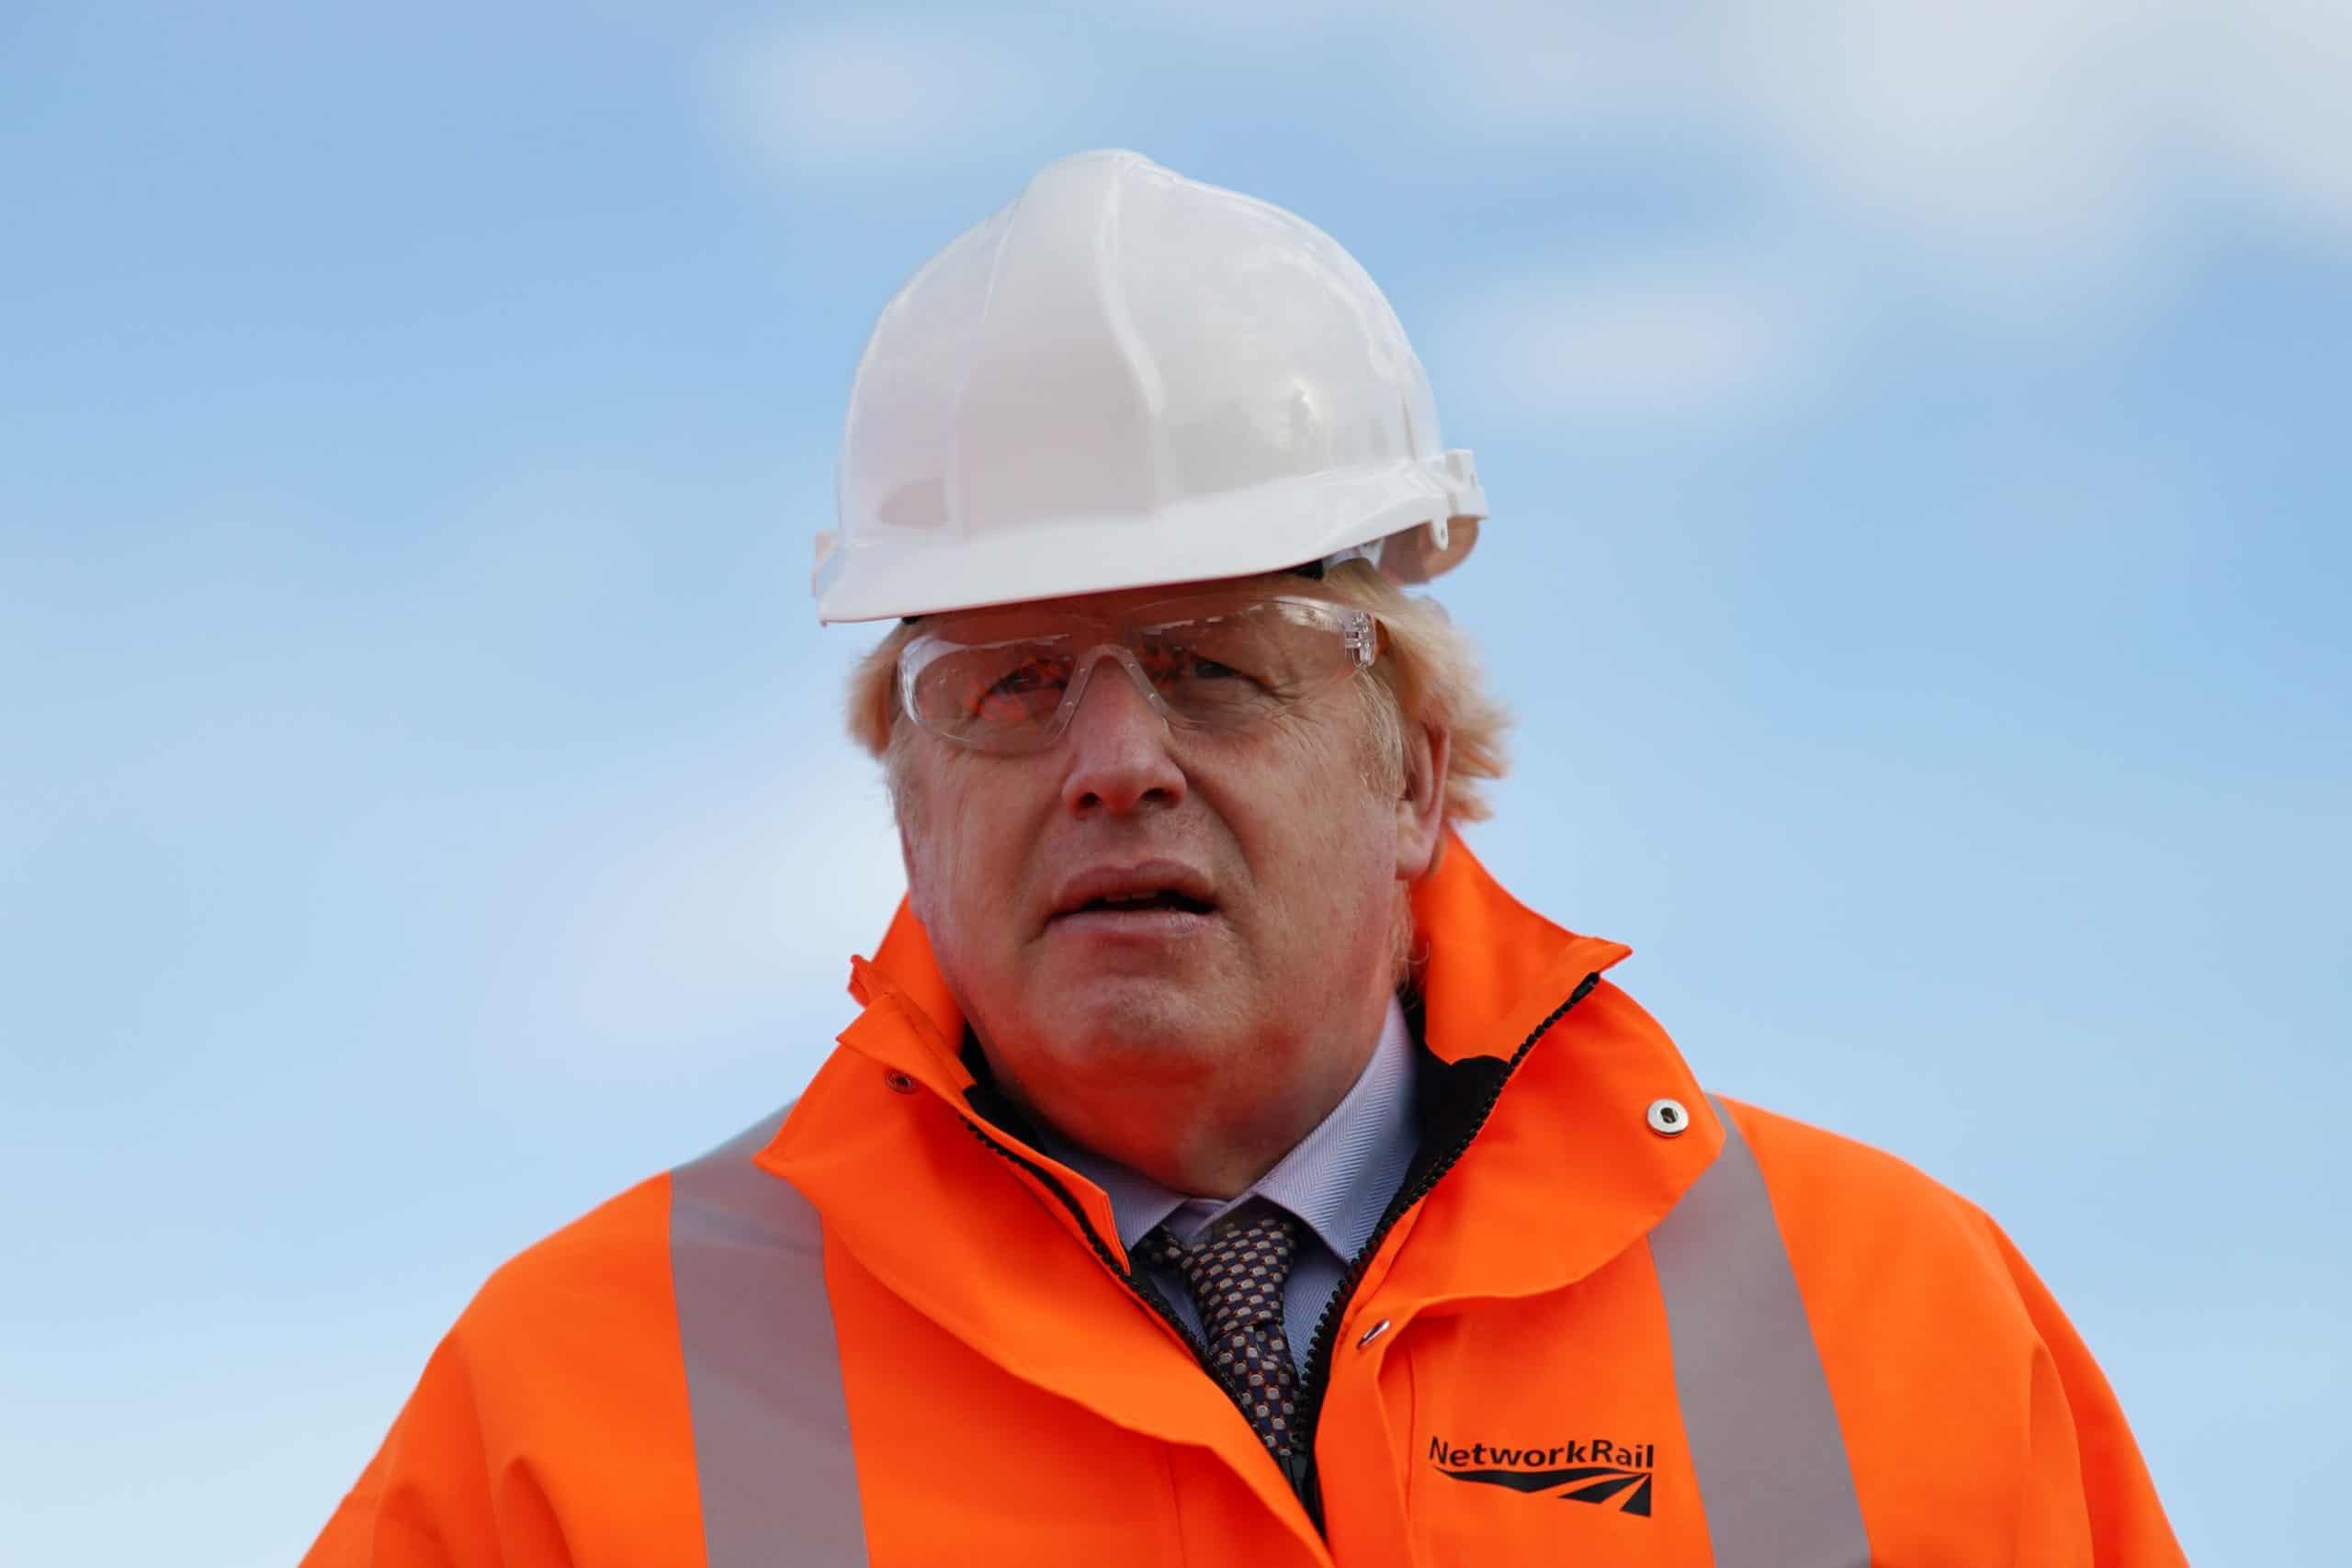 Johnson will U-turn on scaled-back rail plan, George Osborne predicts